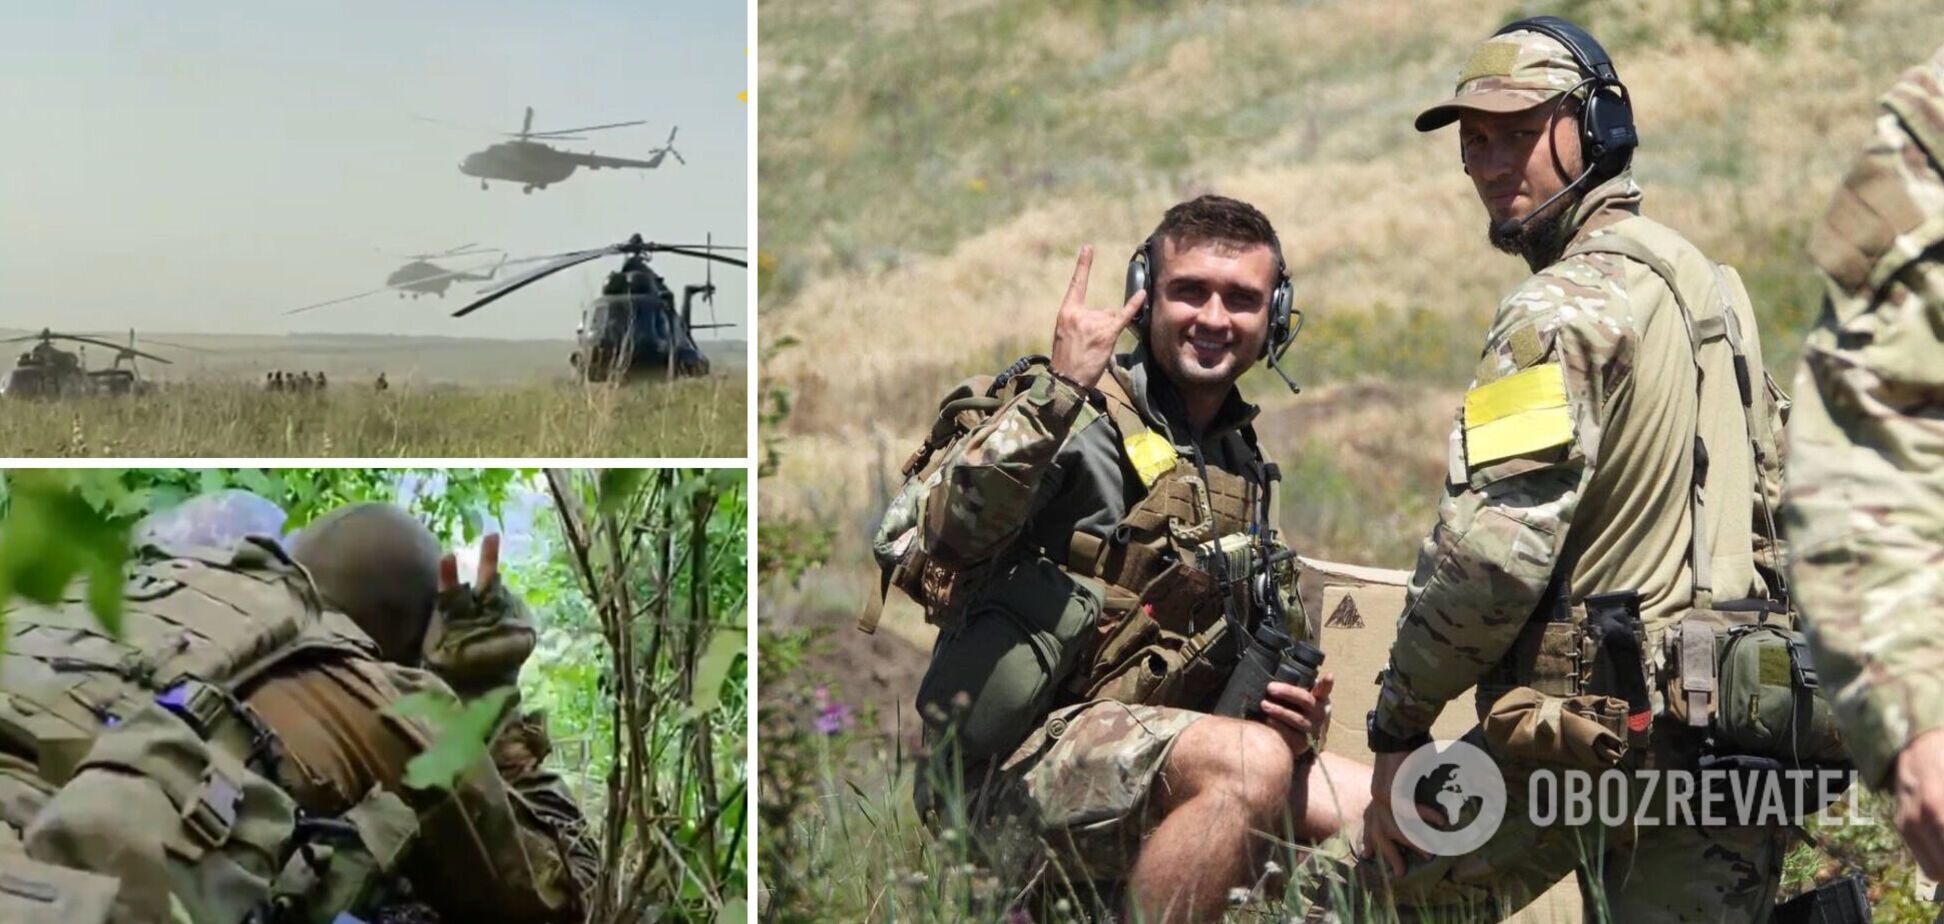 Спецназовцы из отряда 'Омега' показали, как освобождают украинскую землю от врага. Видео